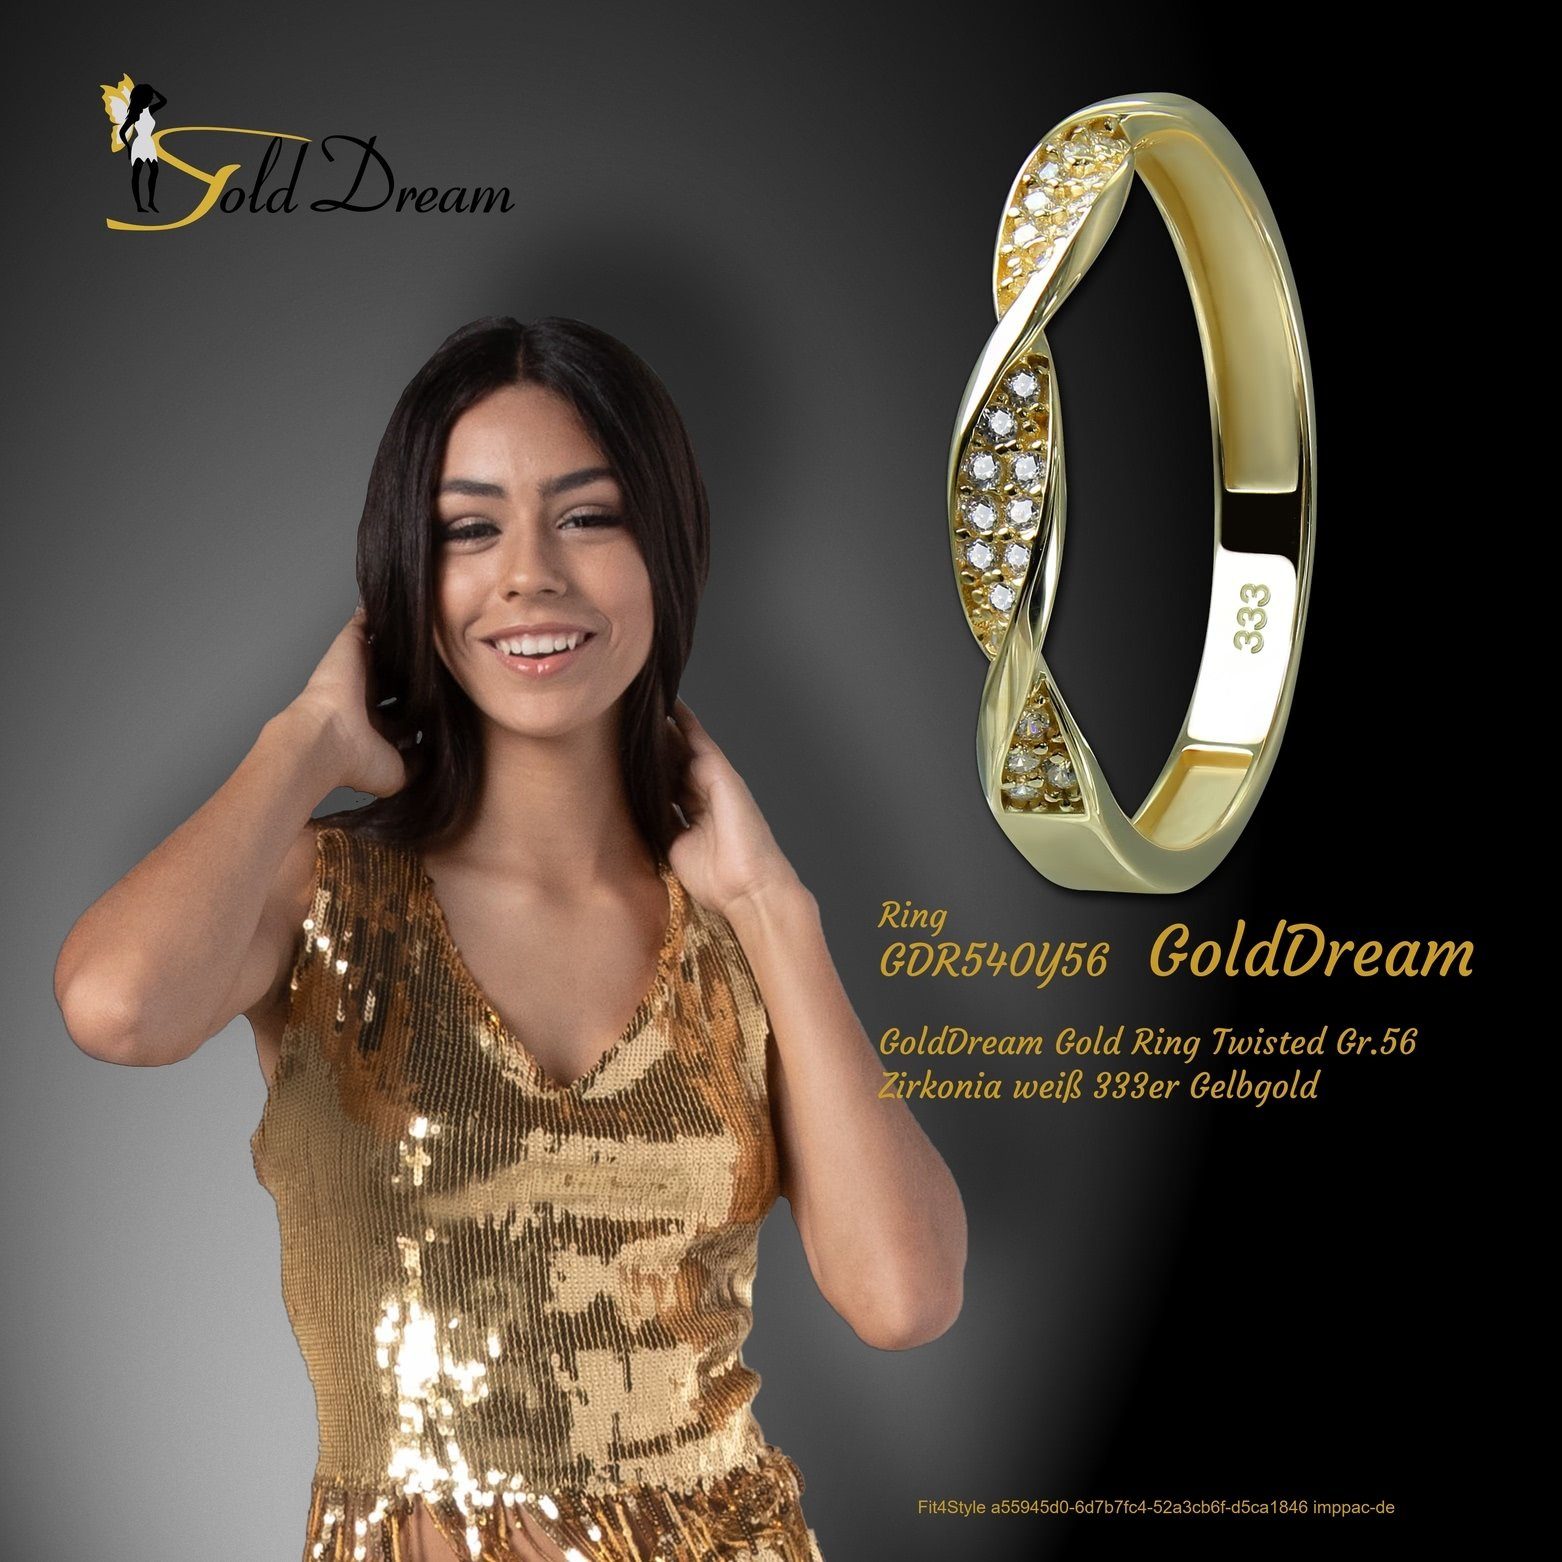 GoldDream Goldring Gelbgold Karat, weiß Twisted Gr.56 gold, Ring (Fingerring), GoldDream Ring - Farbe: 8 Gold Damen 333 Twisted